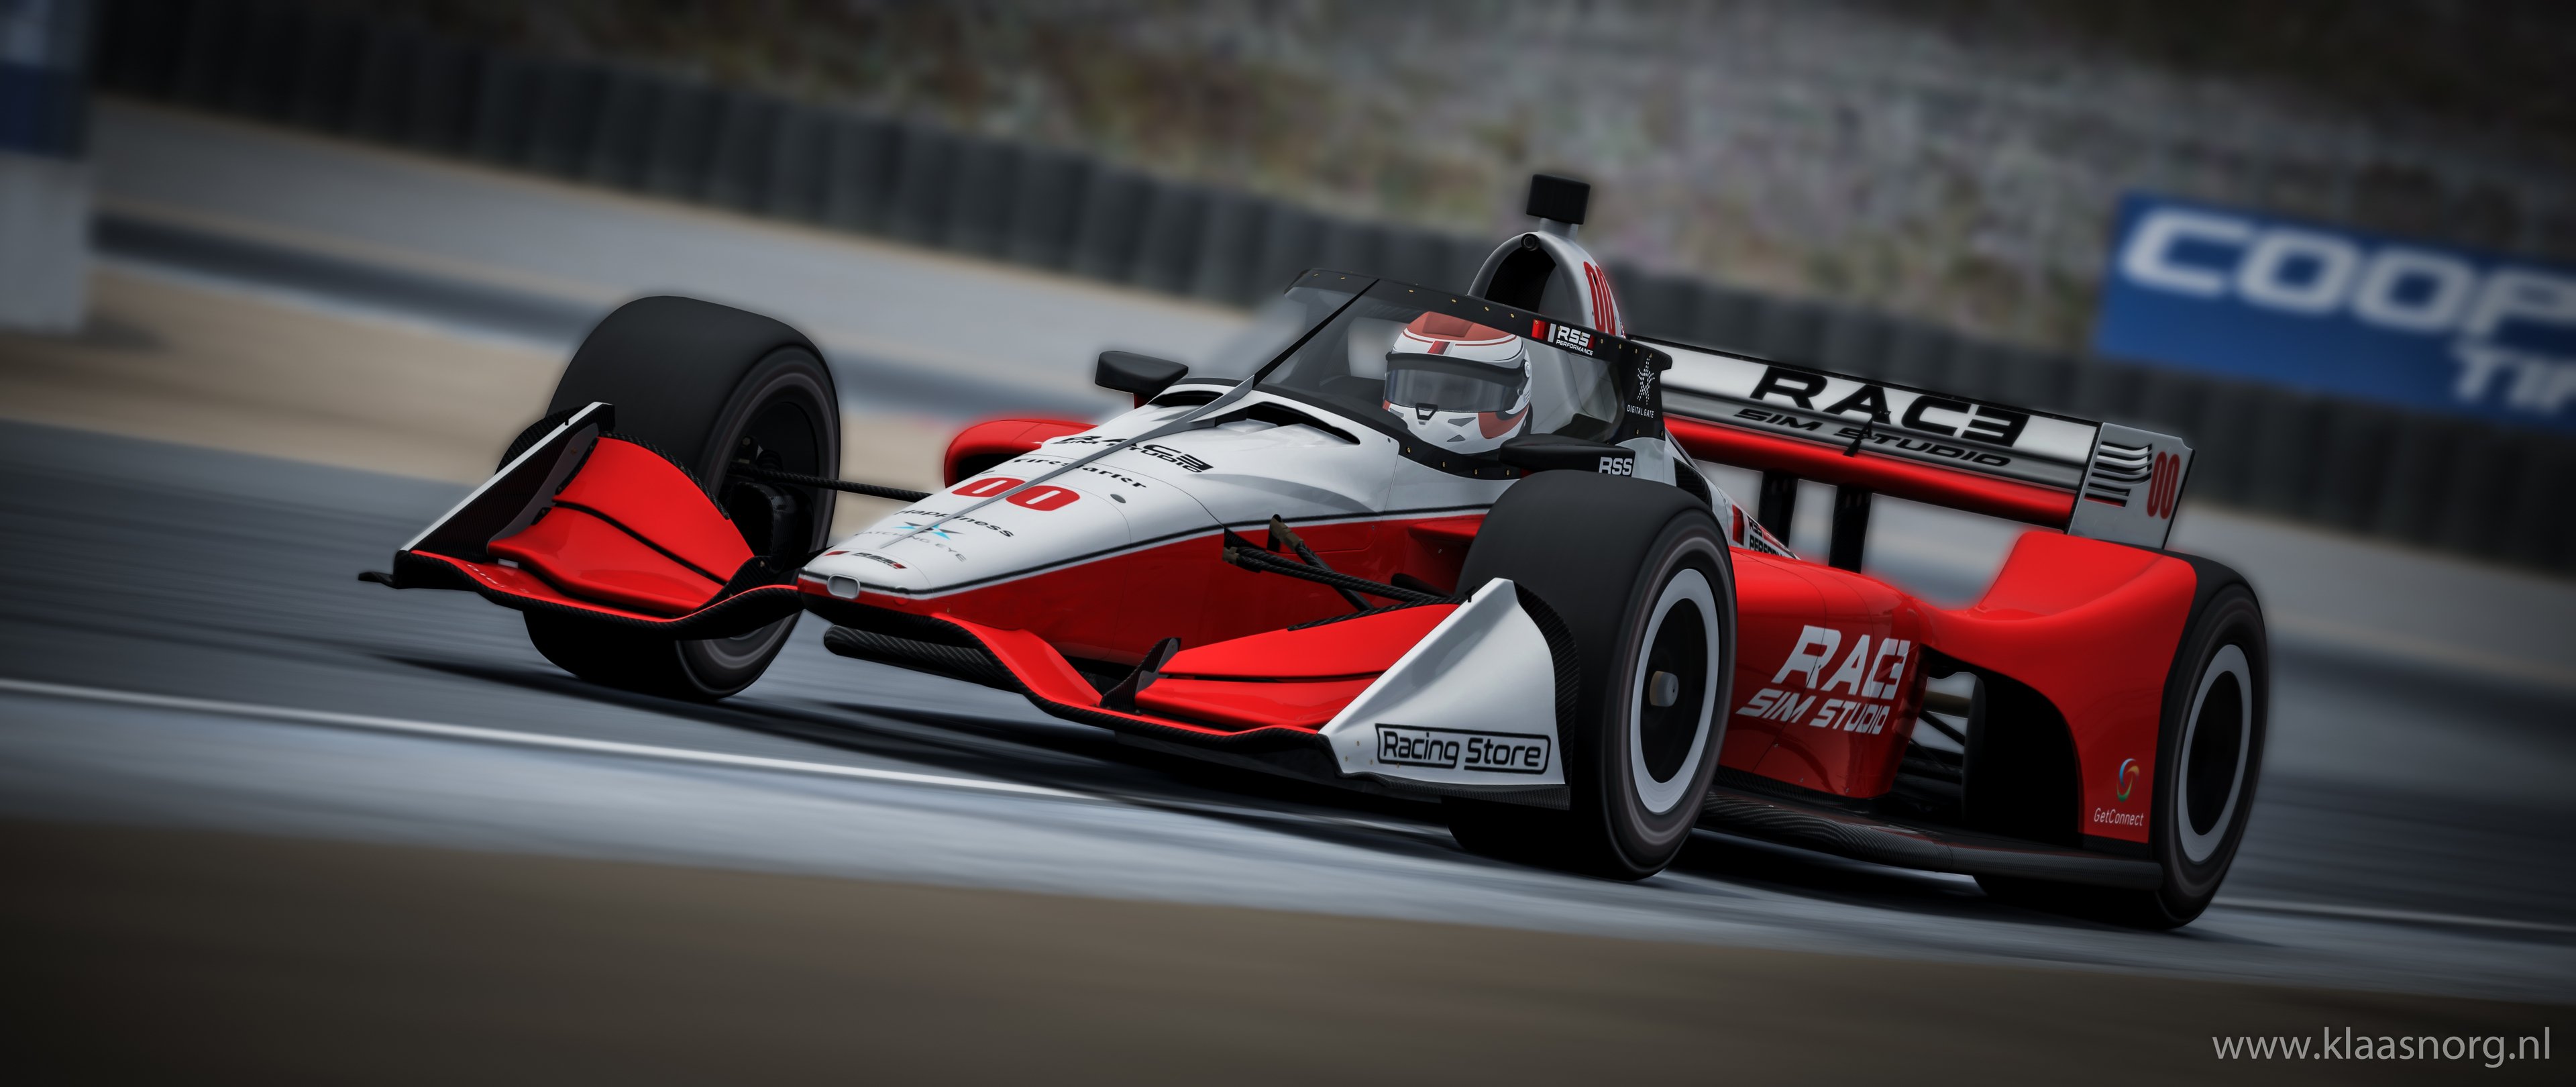 More information about "Assetto Corsa: Formula Americas 2020 (Indycar) by Race Sim Studio disponibile!"